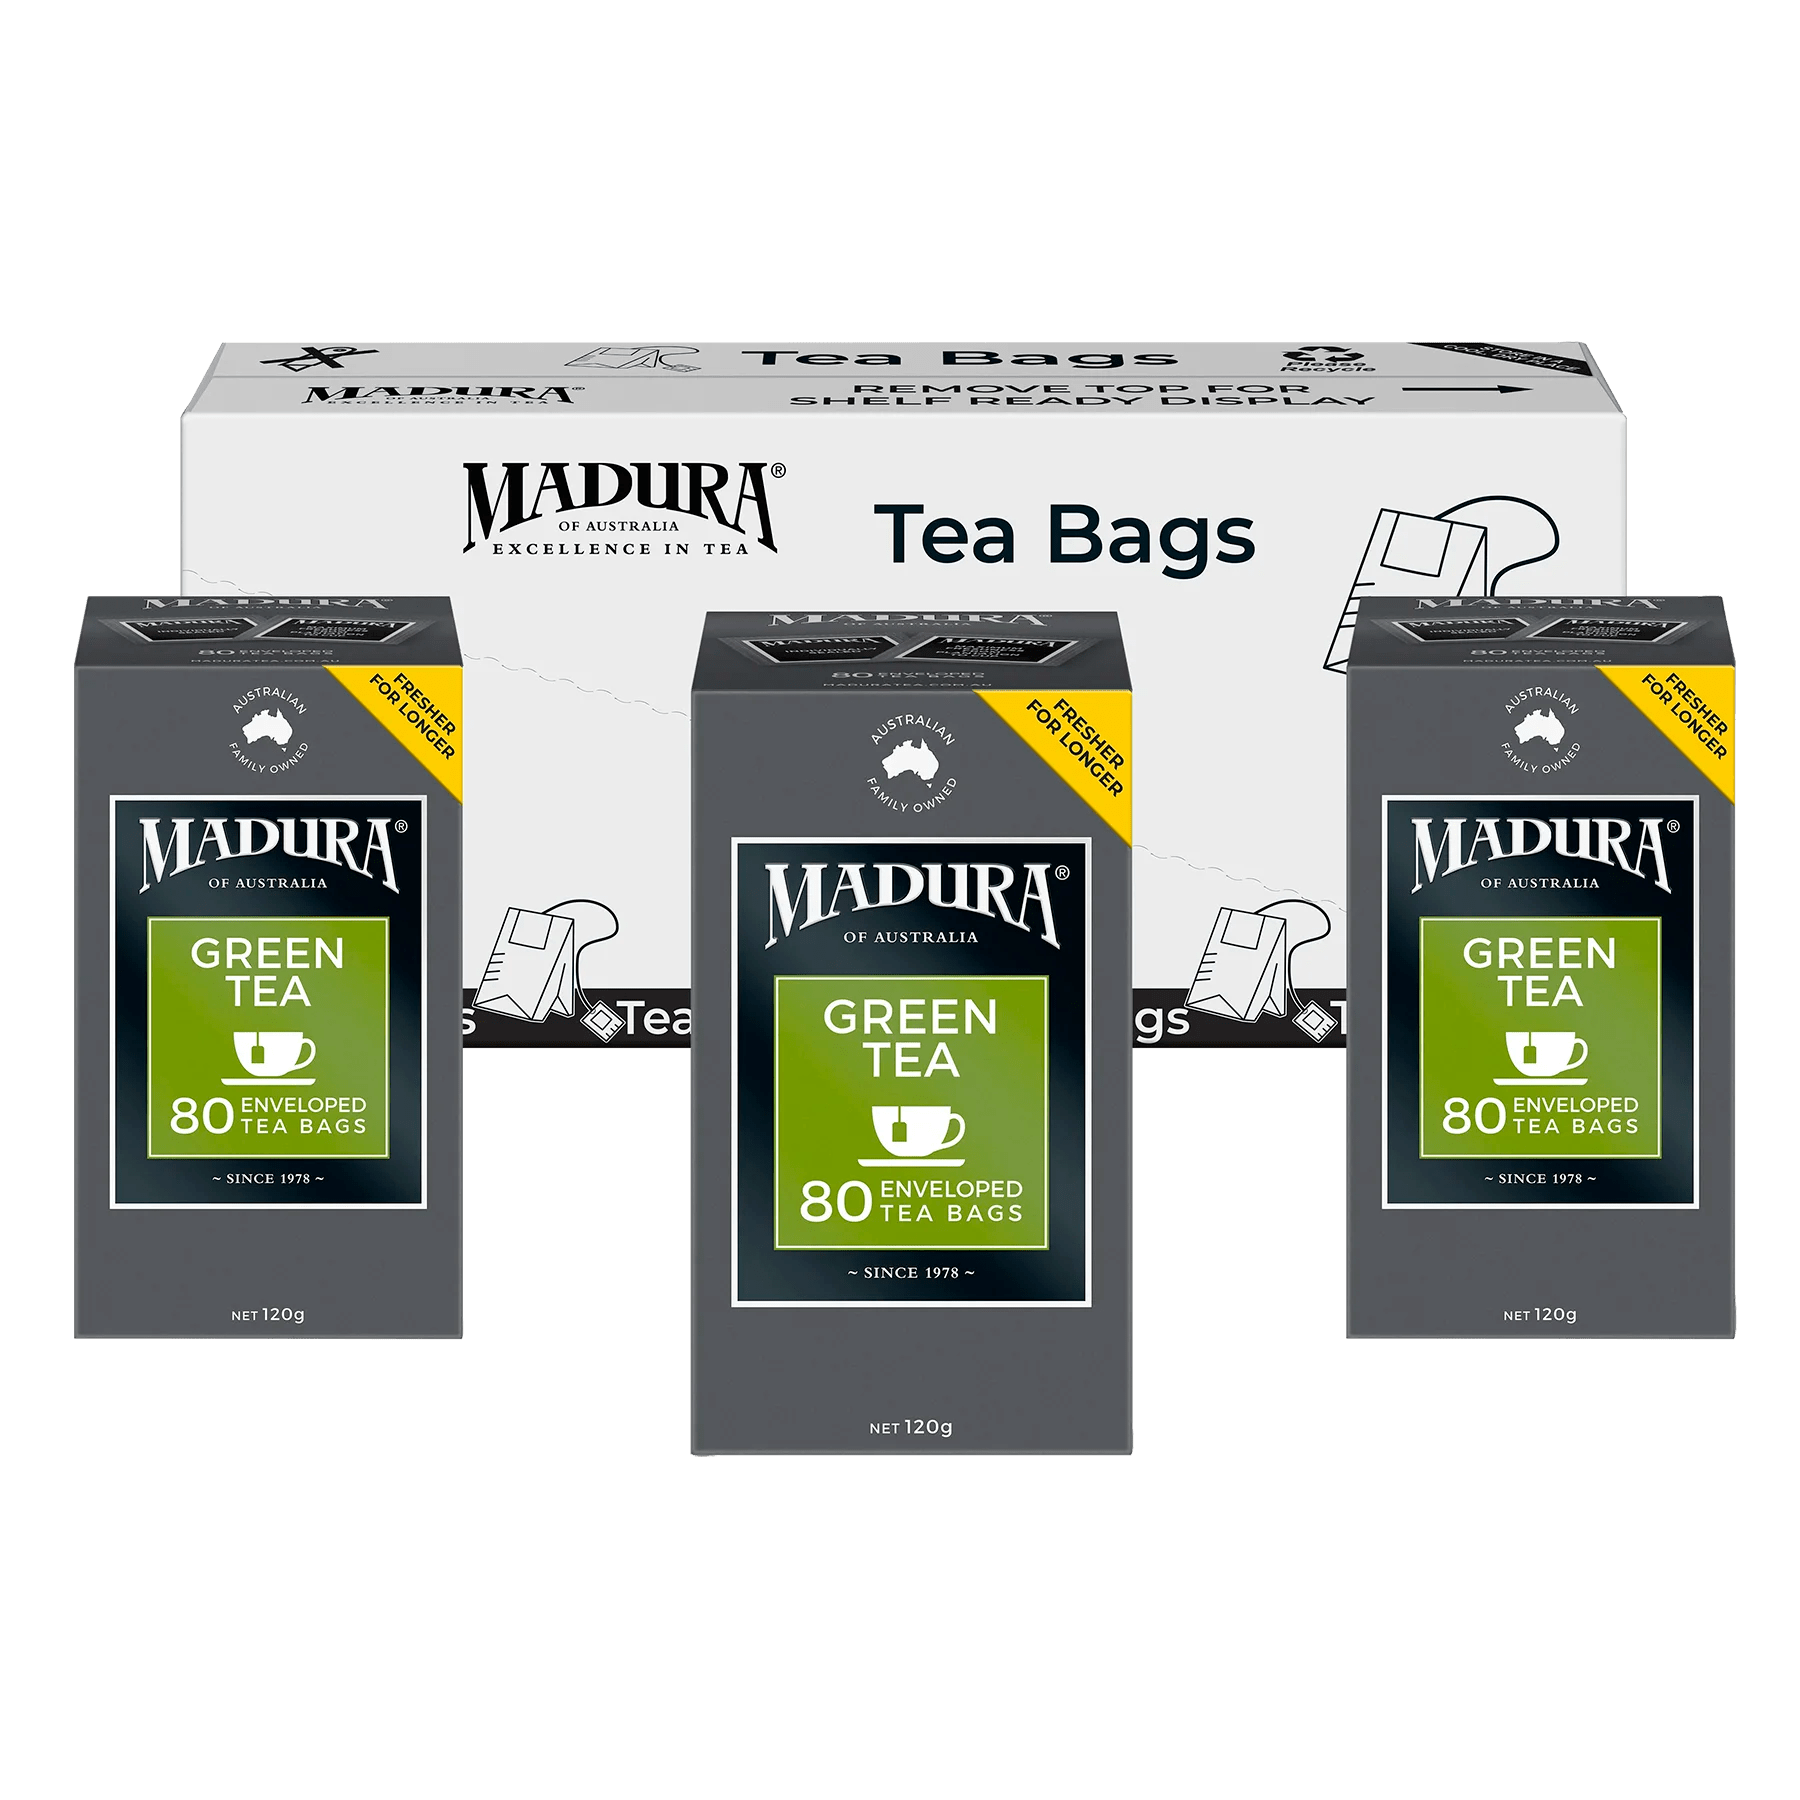 Green Tea 80 Enveloped Tea Bags - Madura Tea